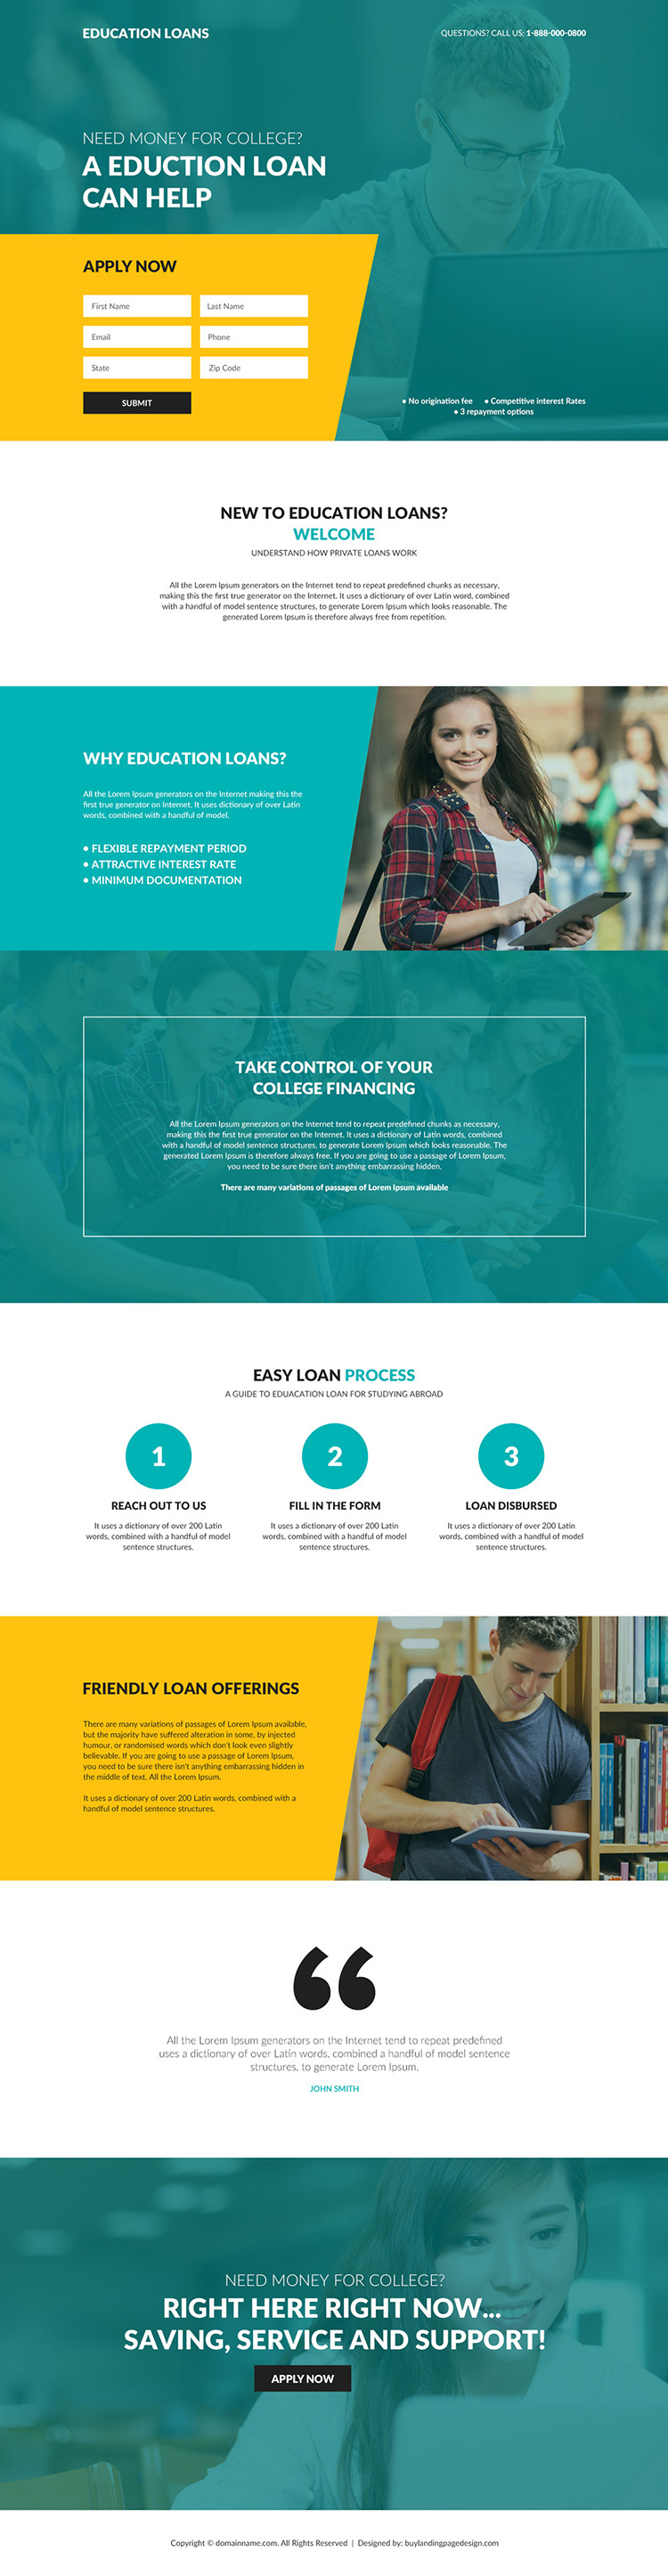 education loan responsive lead capture landing page design